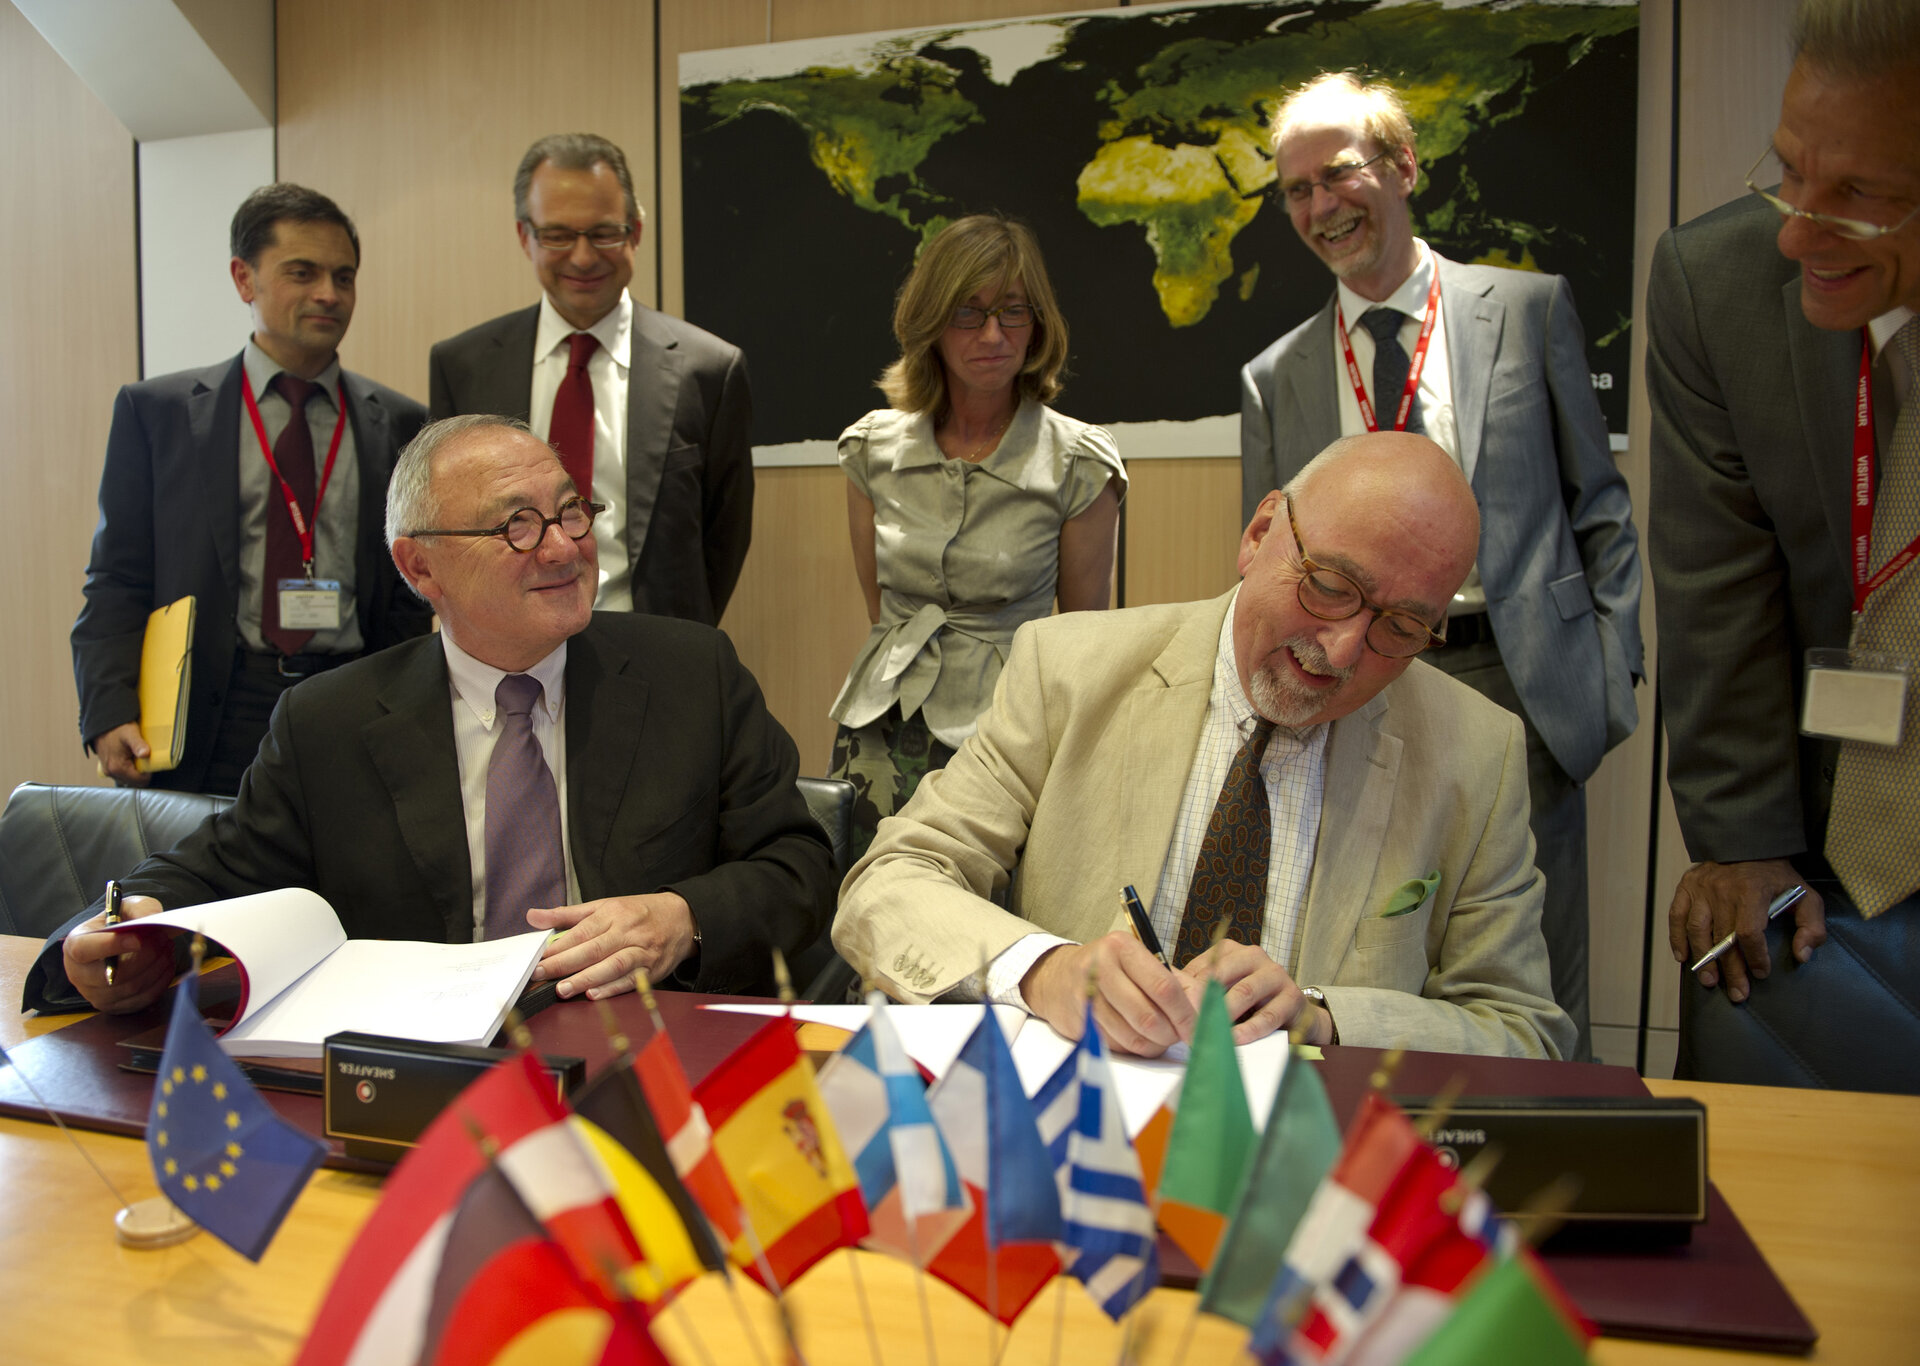 Dordain (left) and Zourek signing the agreement